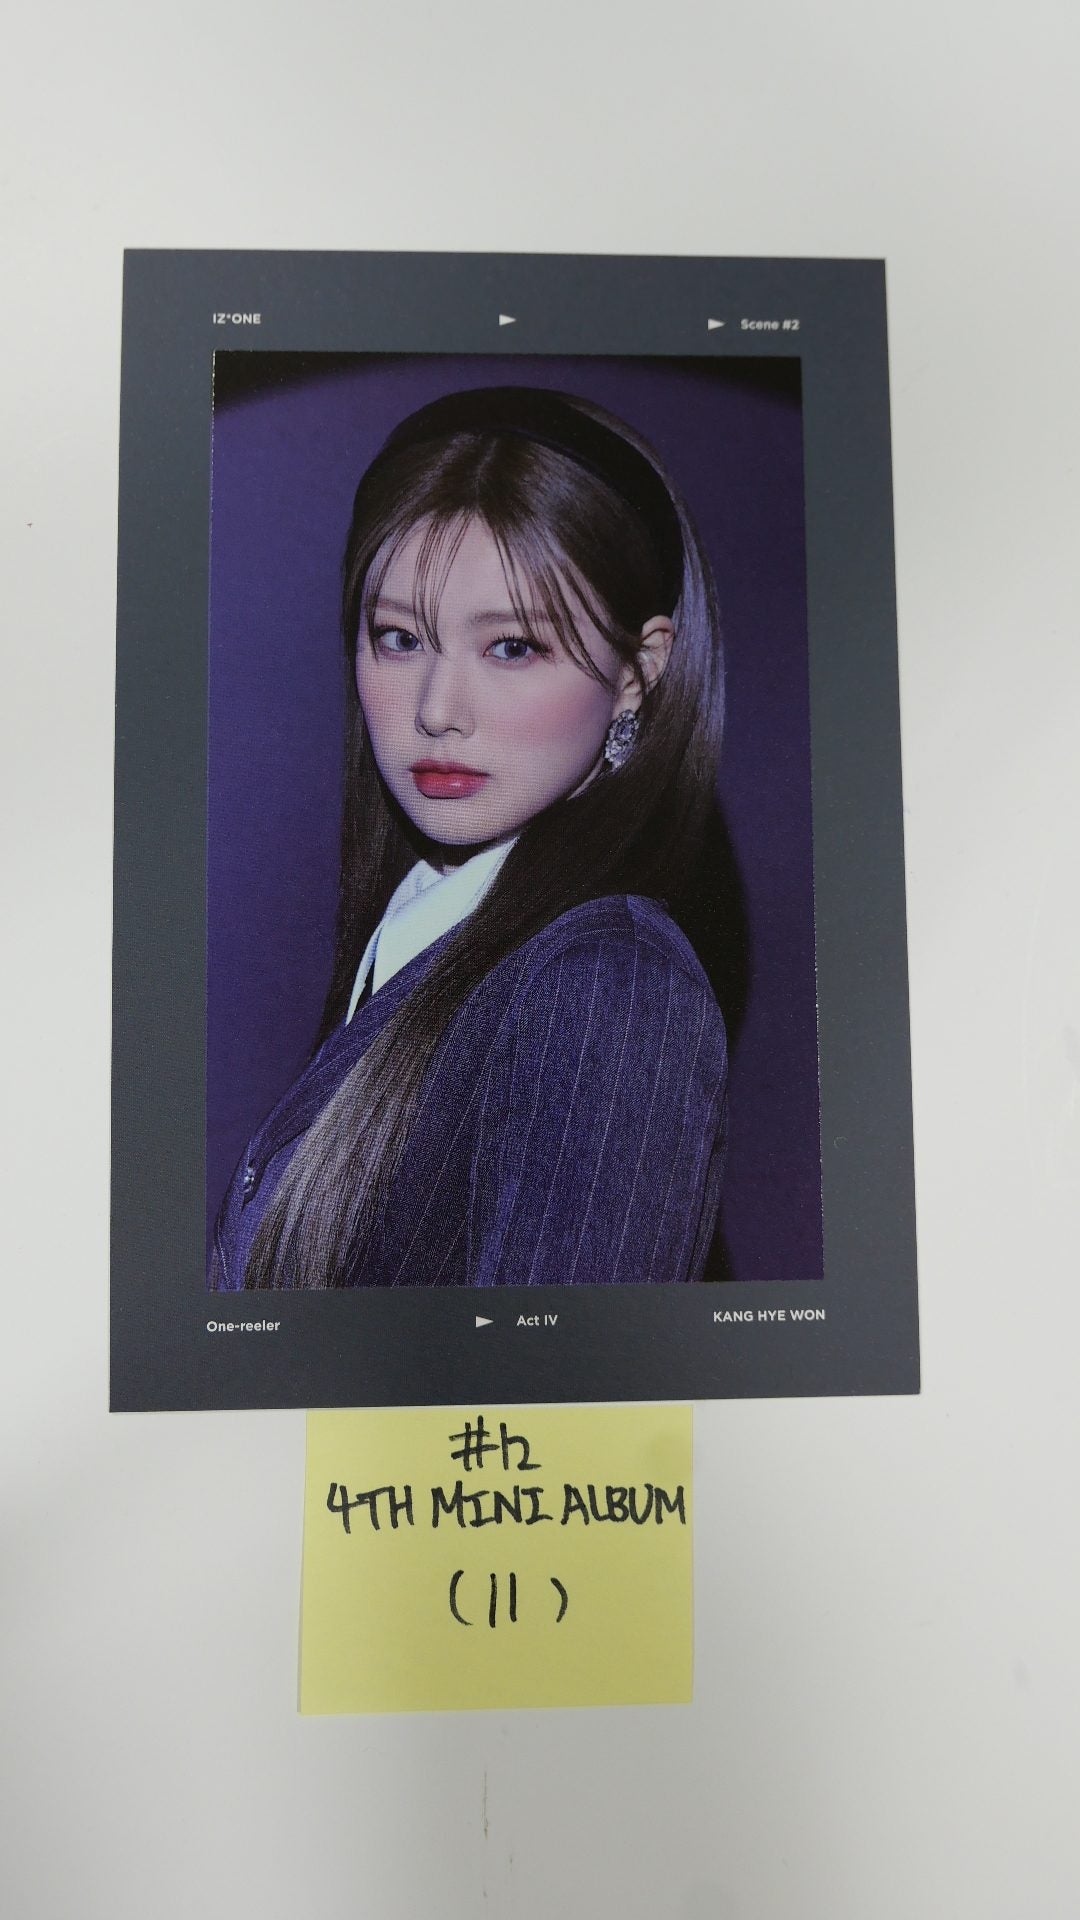 IZ*ONE IZONE 'One-reeler' / Act Ⅳ - Official Photocard - Kang Hye-won